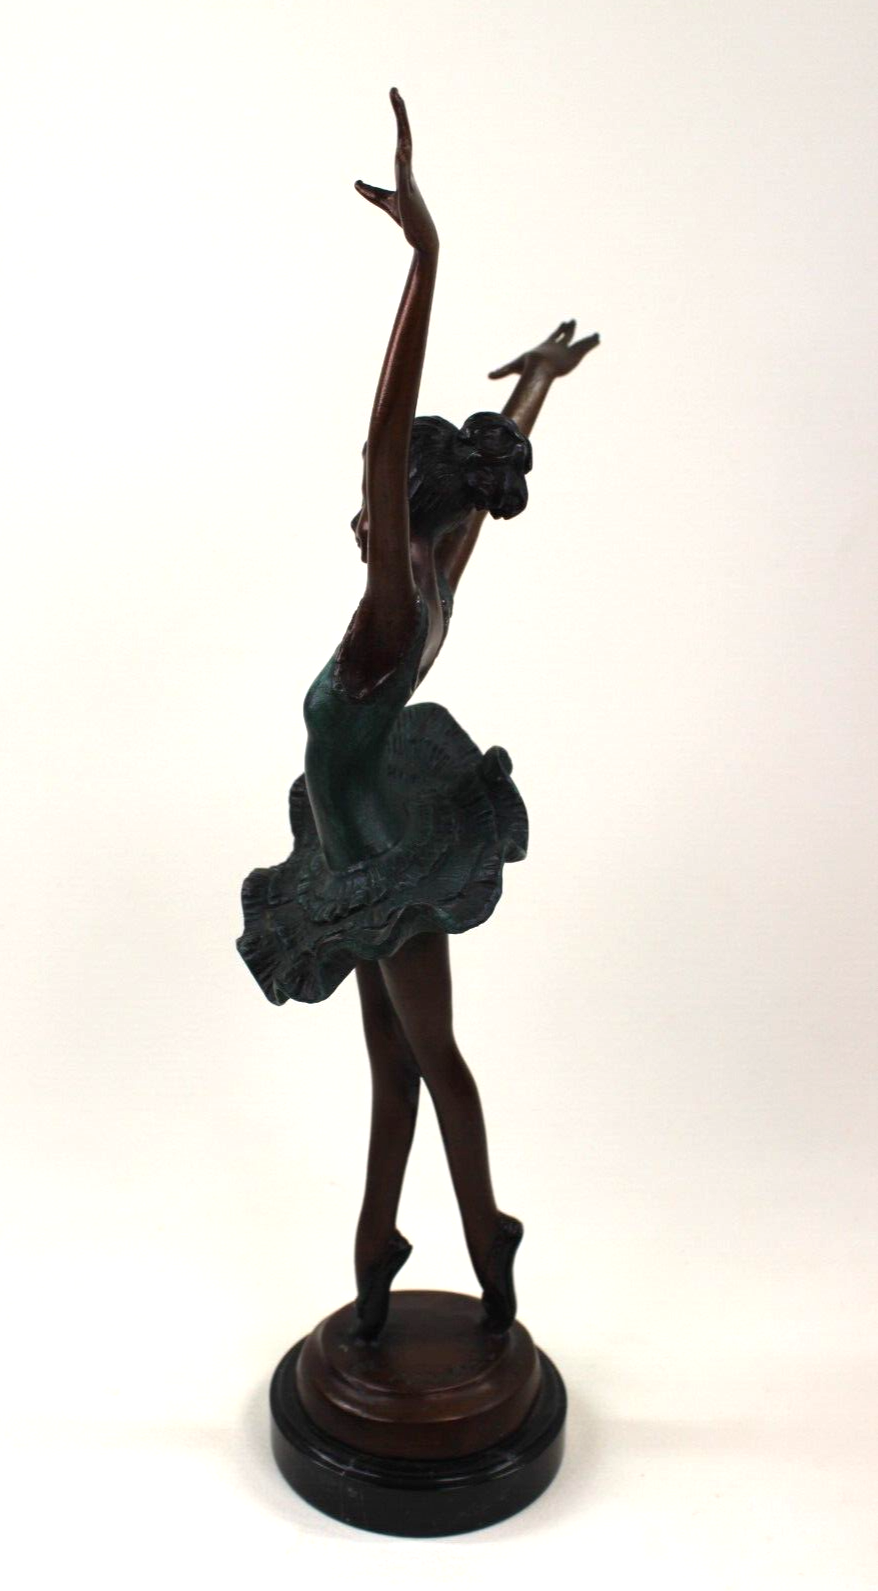 Pierre le faguays a fayral bronze ballerina art de sculpture h